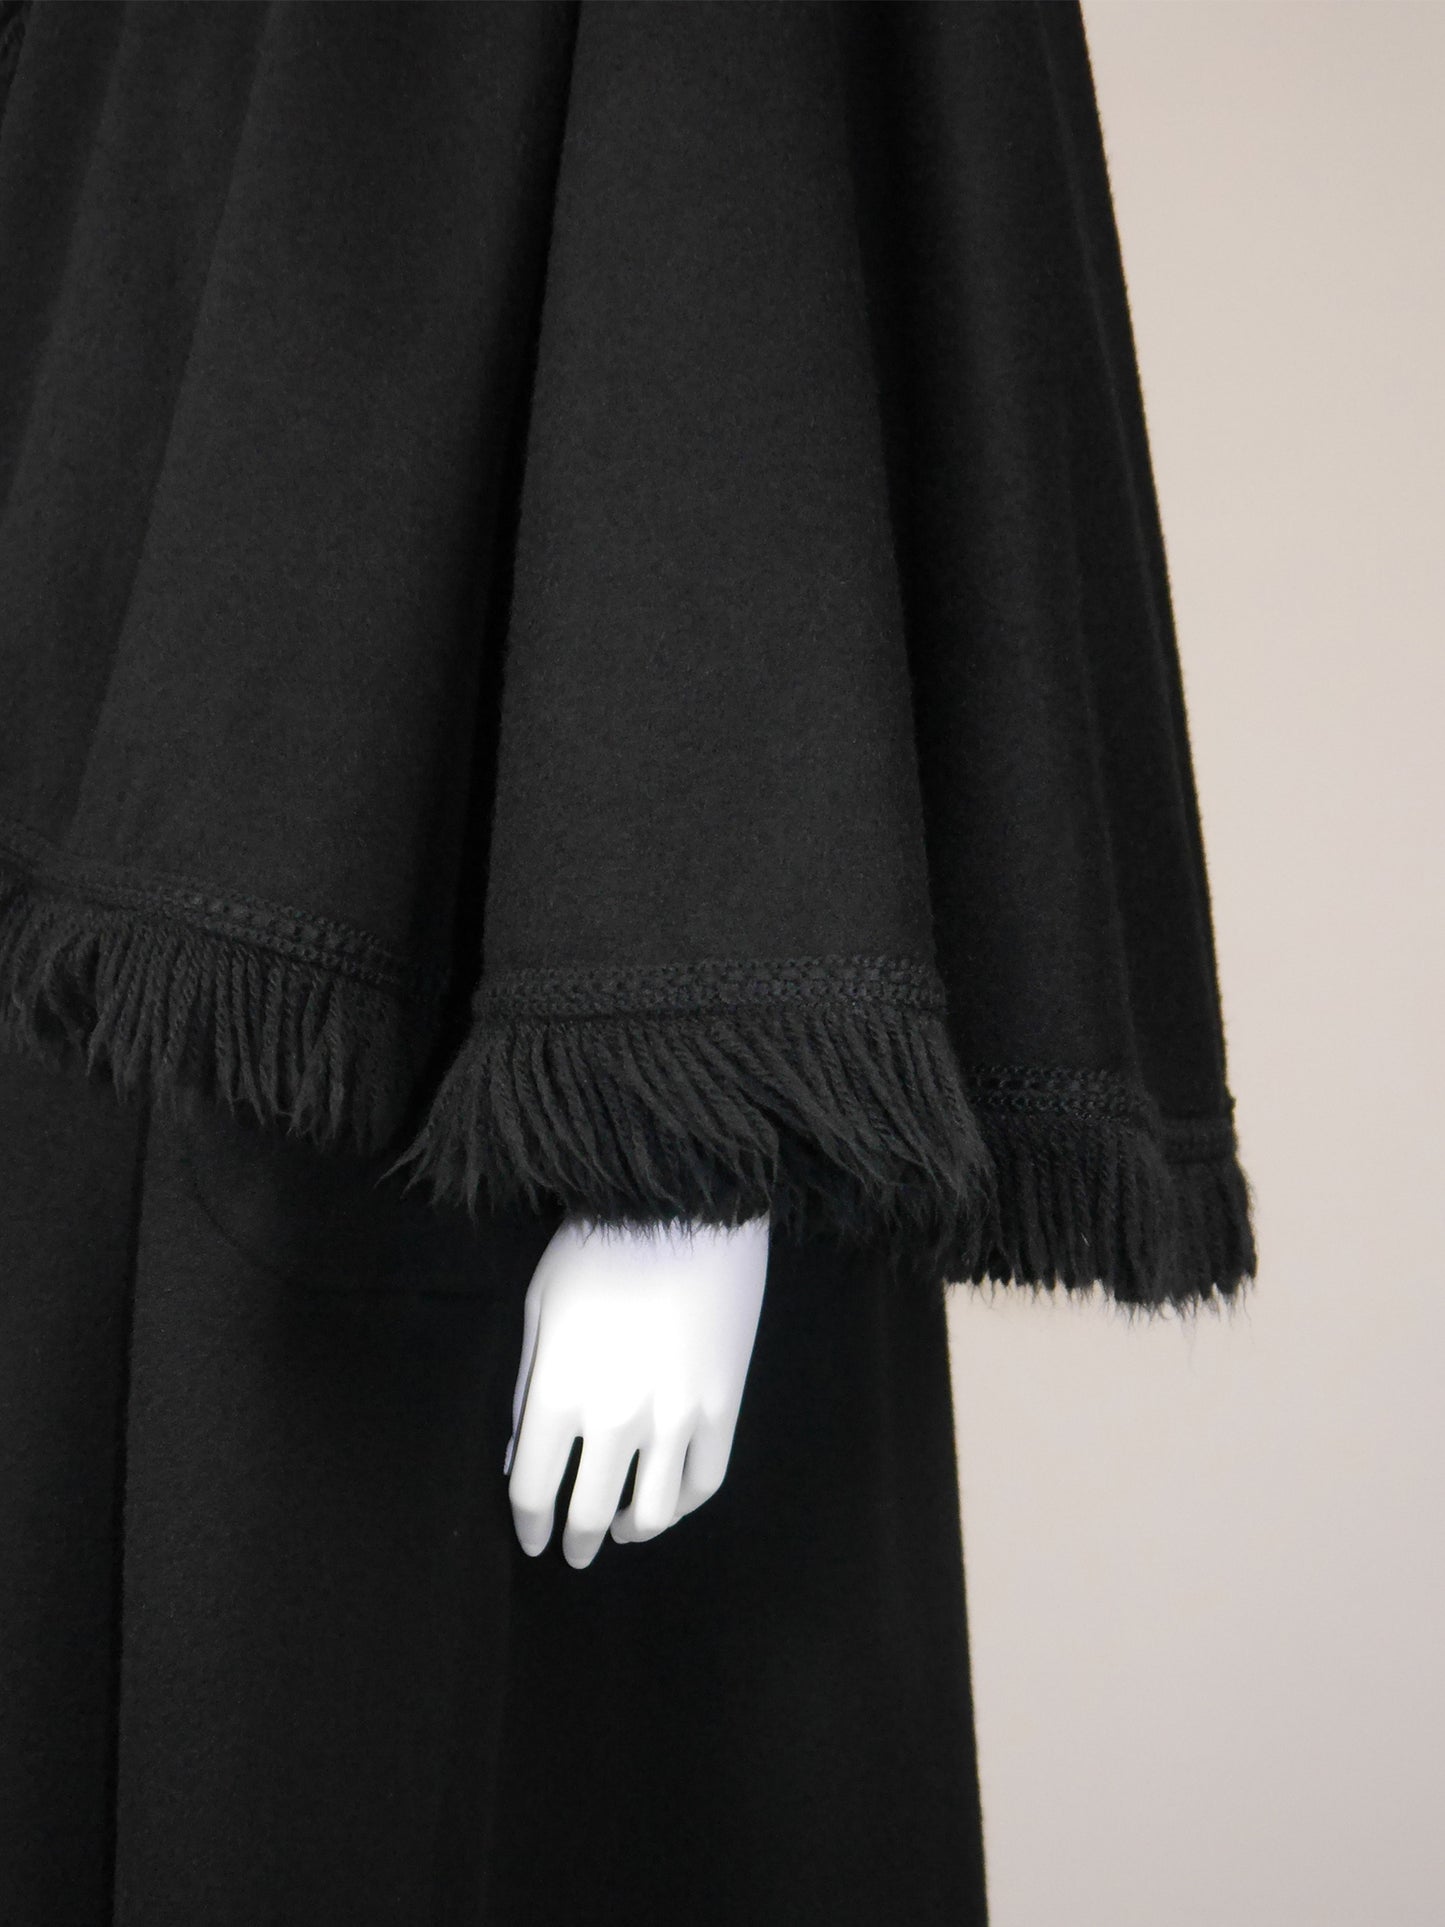 YVES SAINT LAURENT 1970s Vintage Fringed Hooded Wool Cape Coat Size S